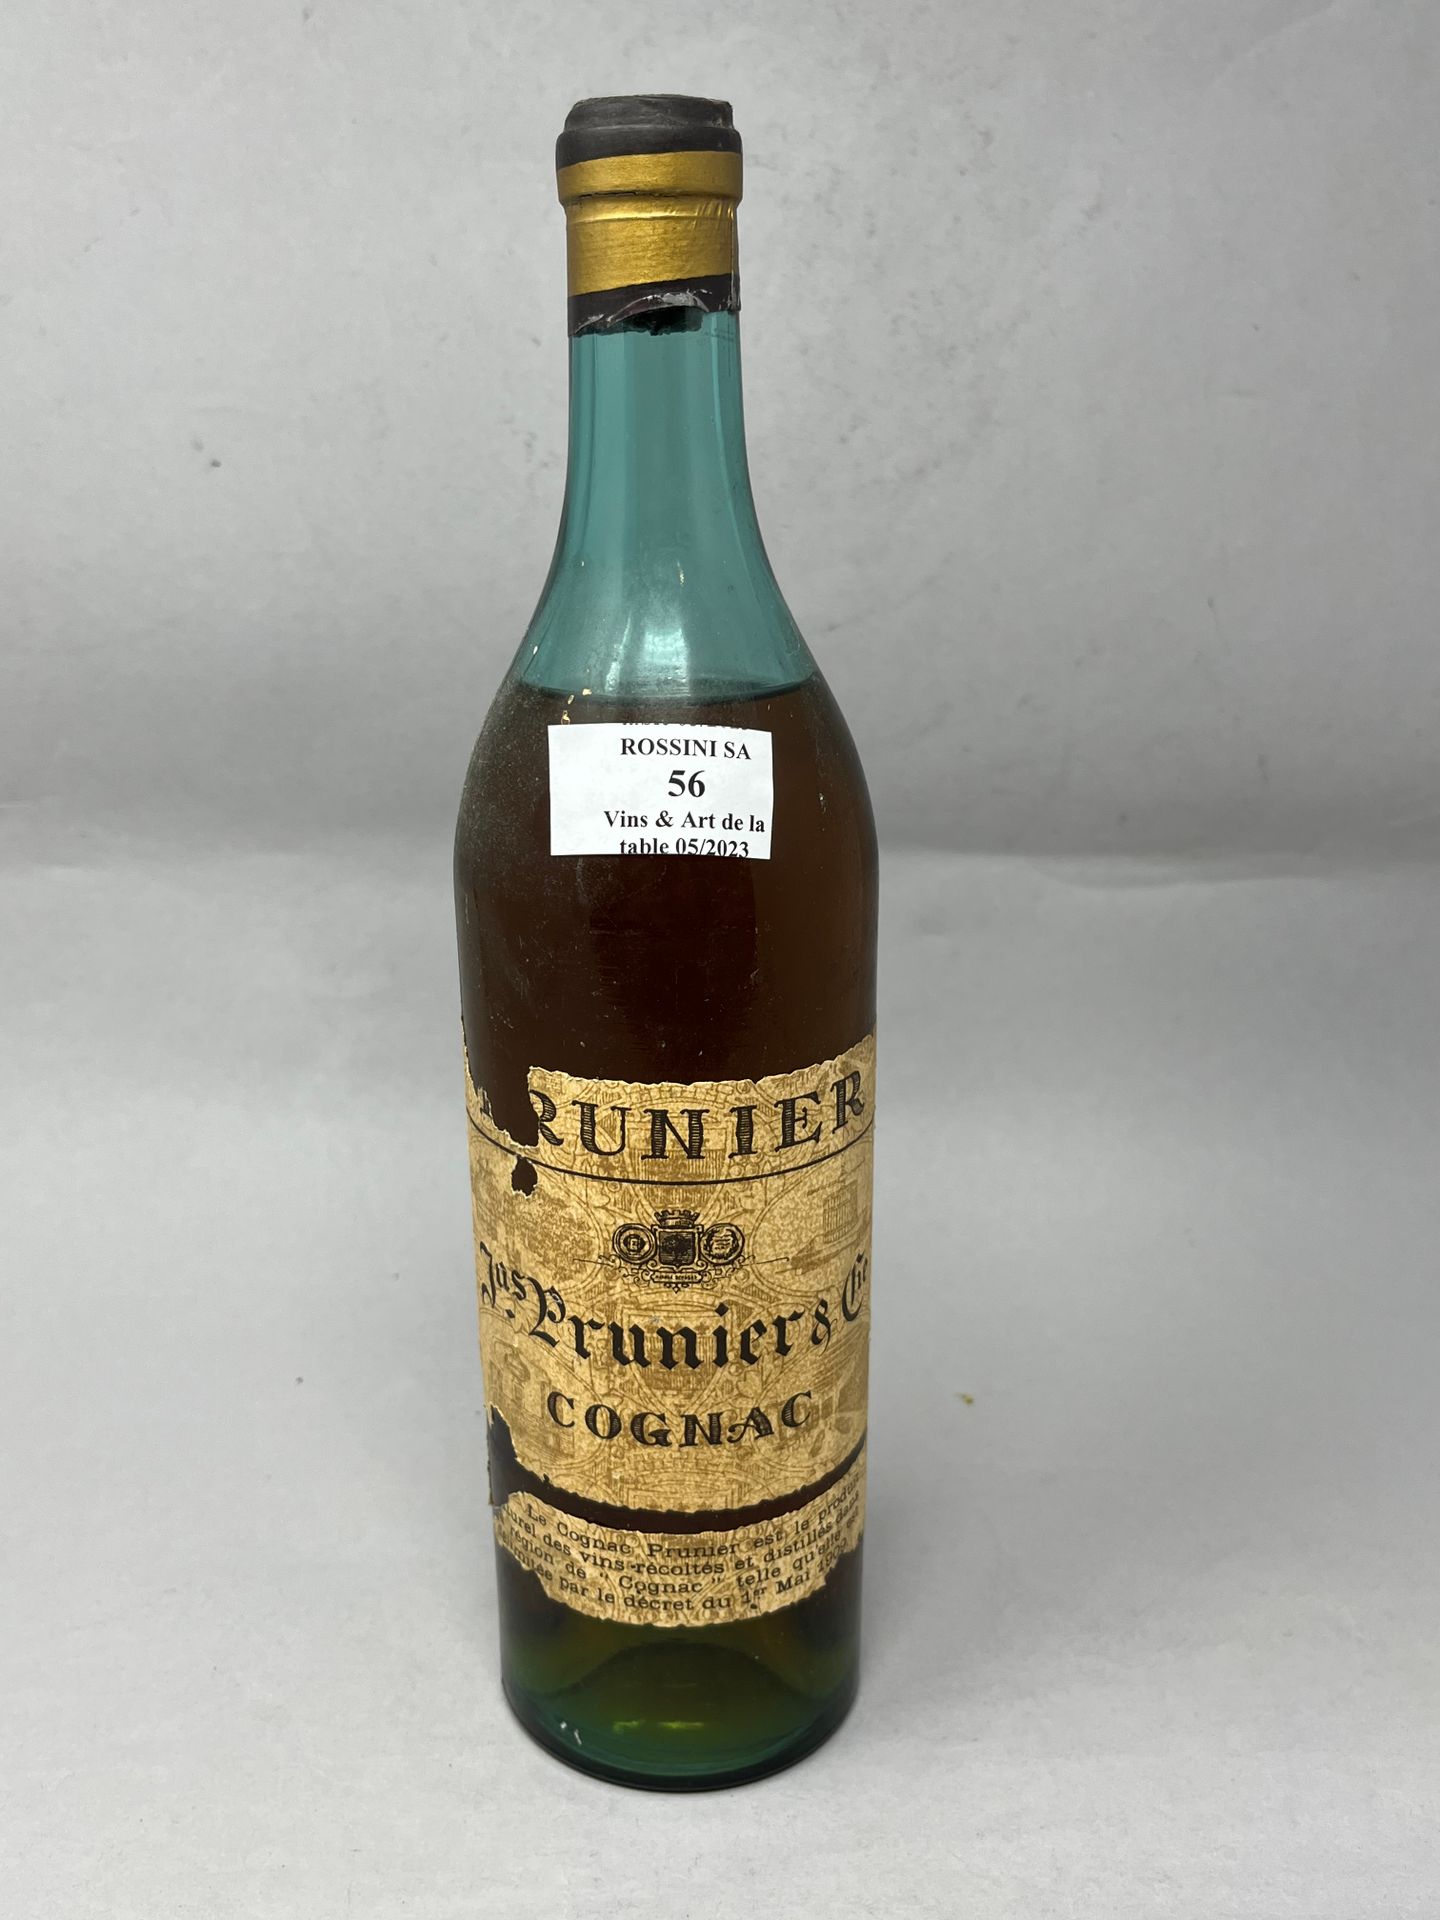 Null 1 bottle of Prunier Cognac.
Level above the shoulder